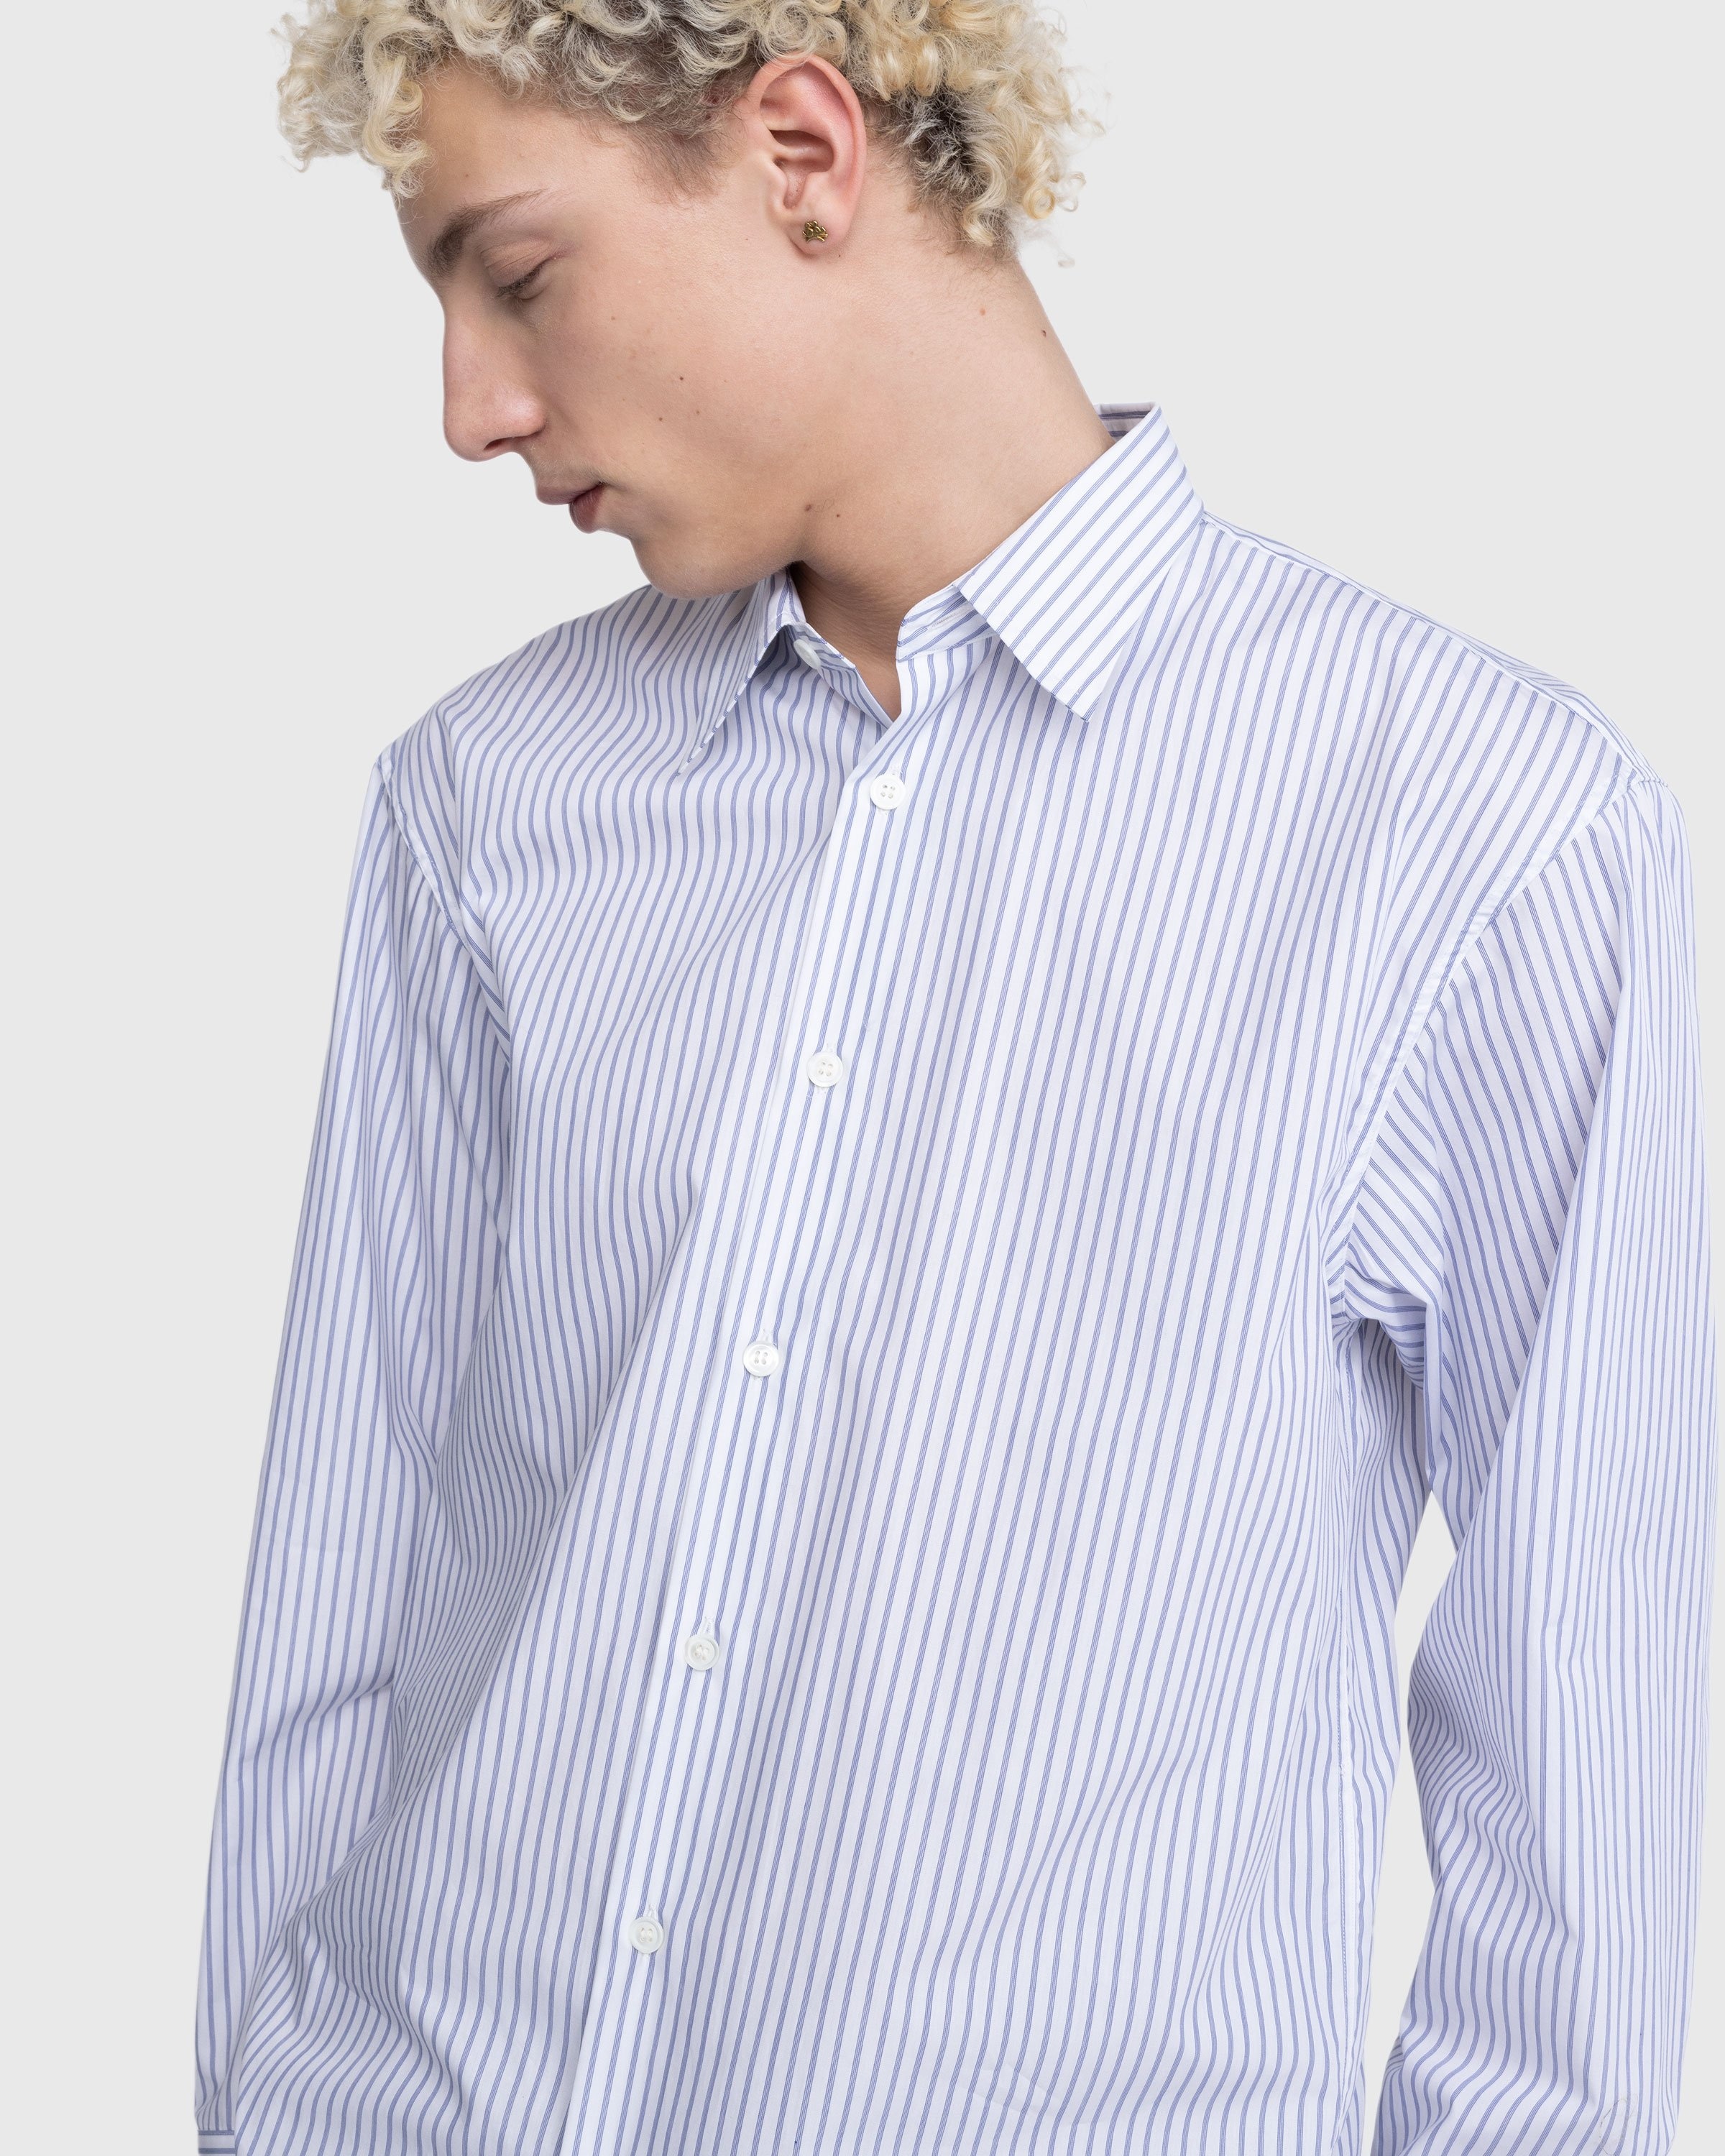 Dries van Noten – Croom Shirt Striped White - Longsleeve Shirts - White - Image 6